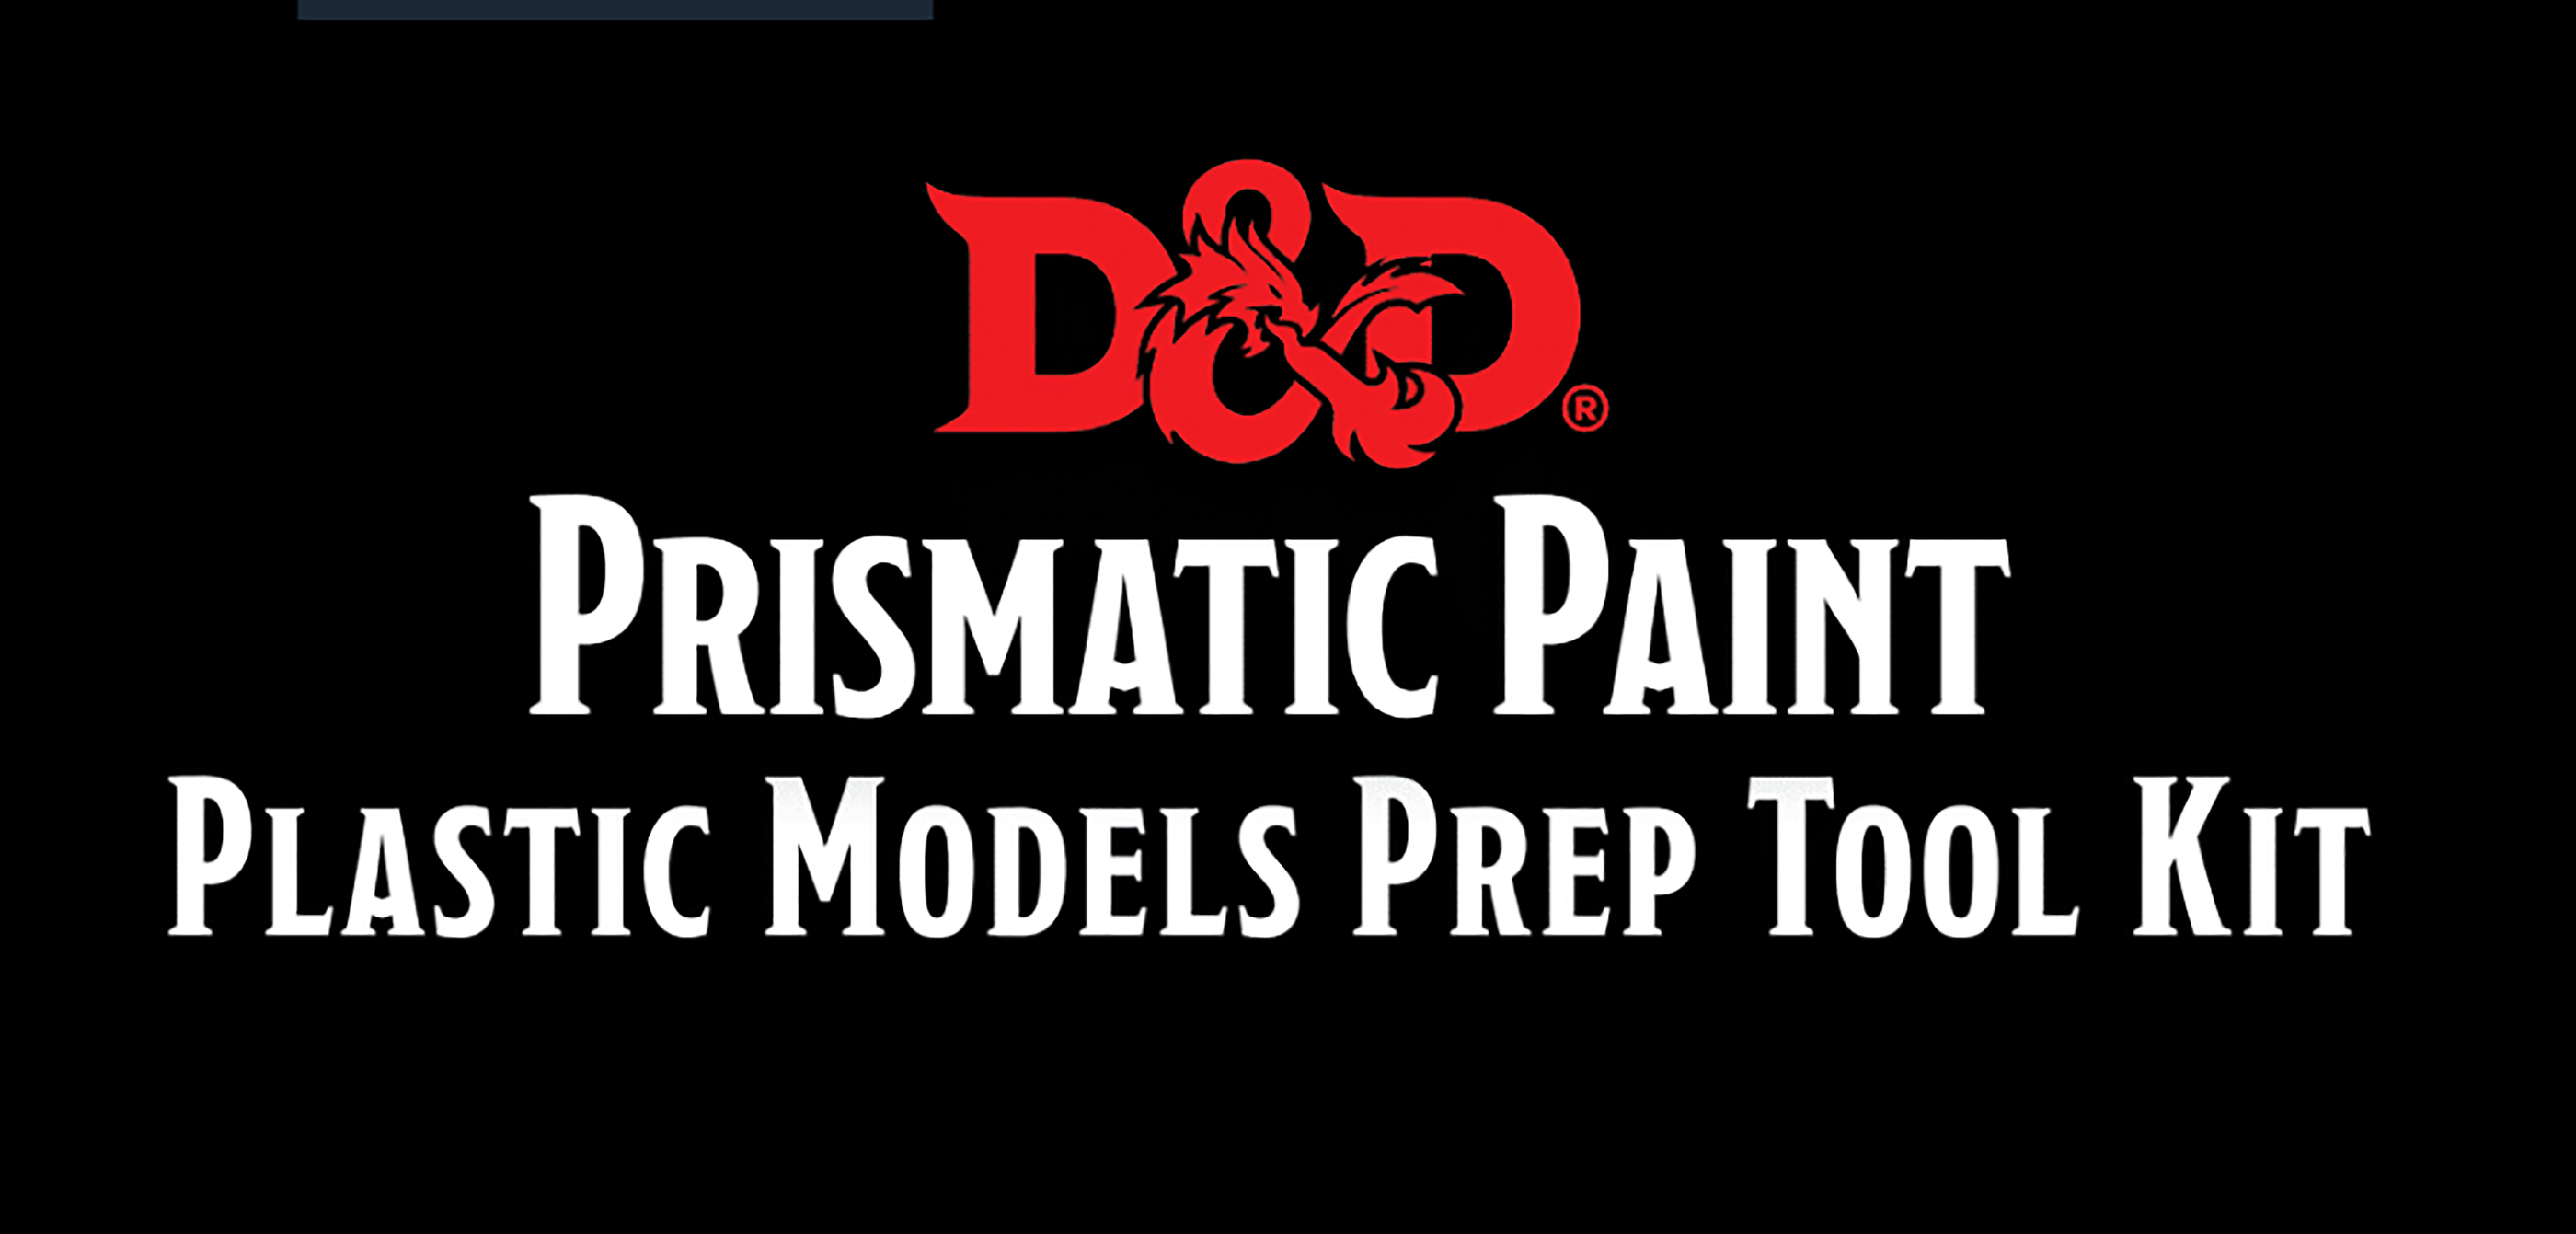 Dungeons & Dragons Prismatic Paint Plastic Models Prep Tool Kit